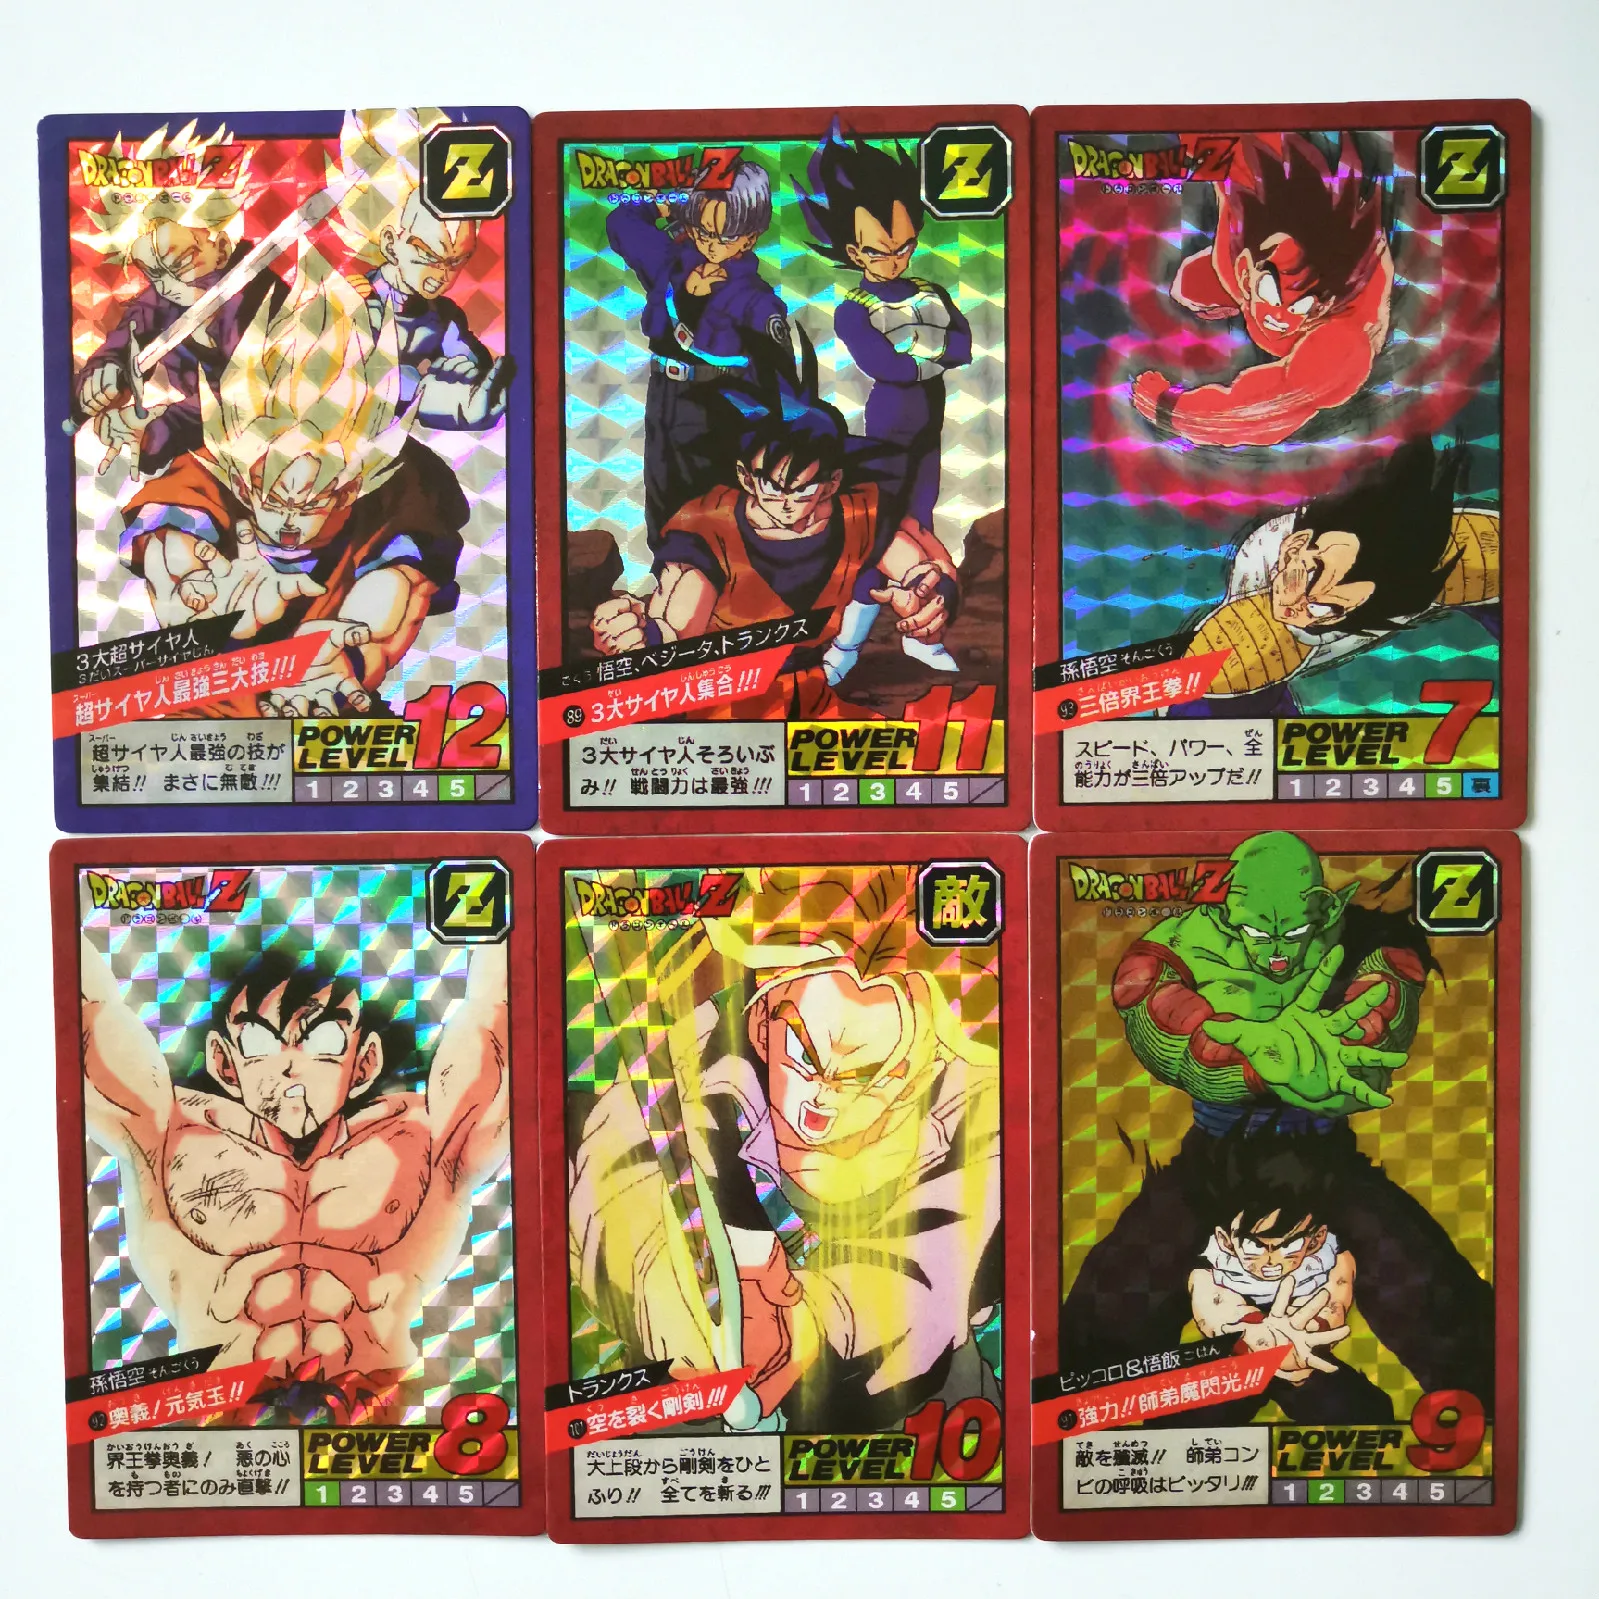 43 шт./компл. супер Dragon Ball-Z Fighting 3 Reissue Heroes batch Card Ultra Instinct Goku Vegeta игровая коллекция карт